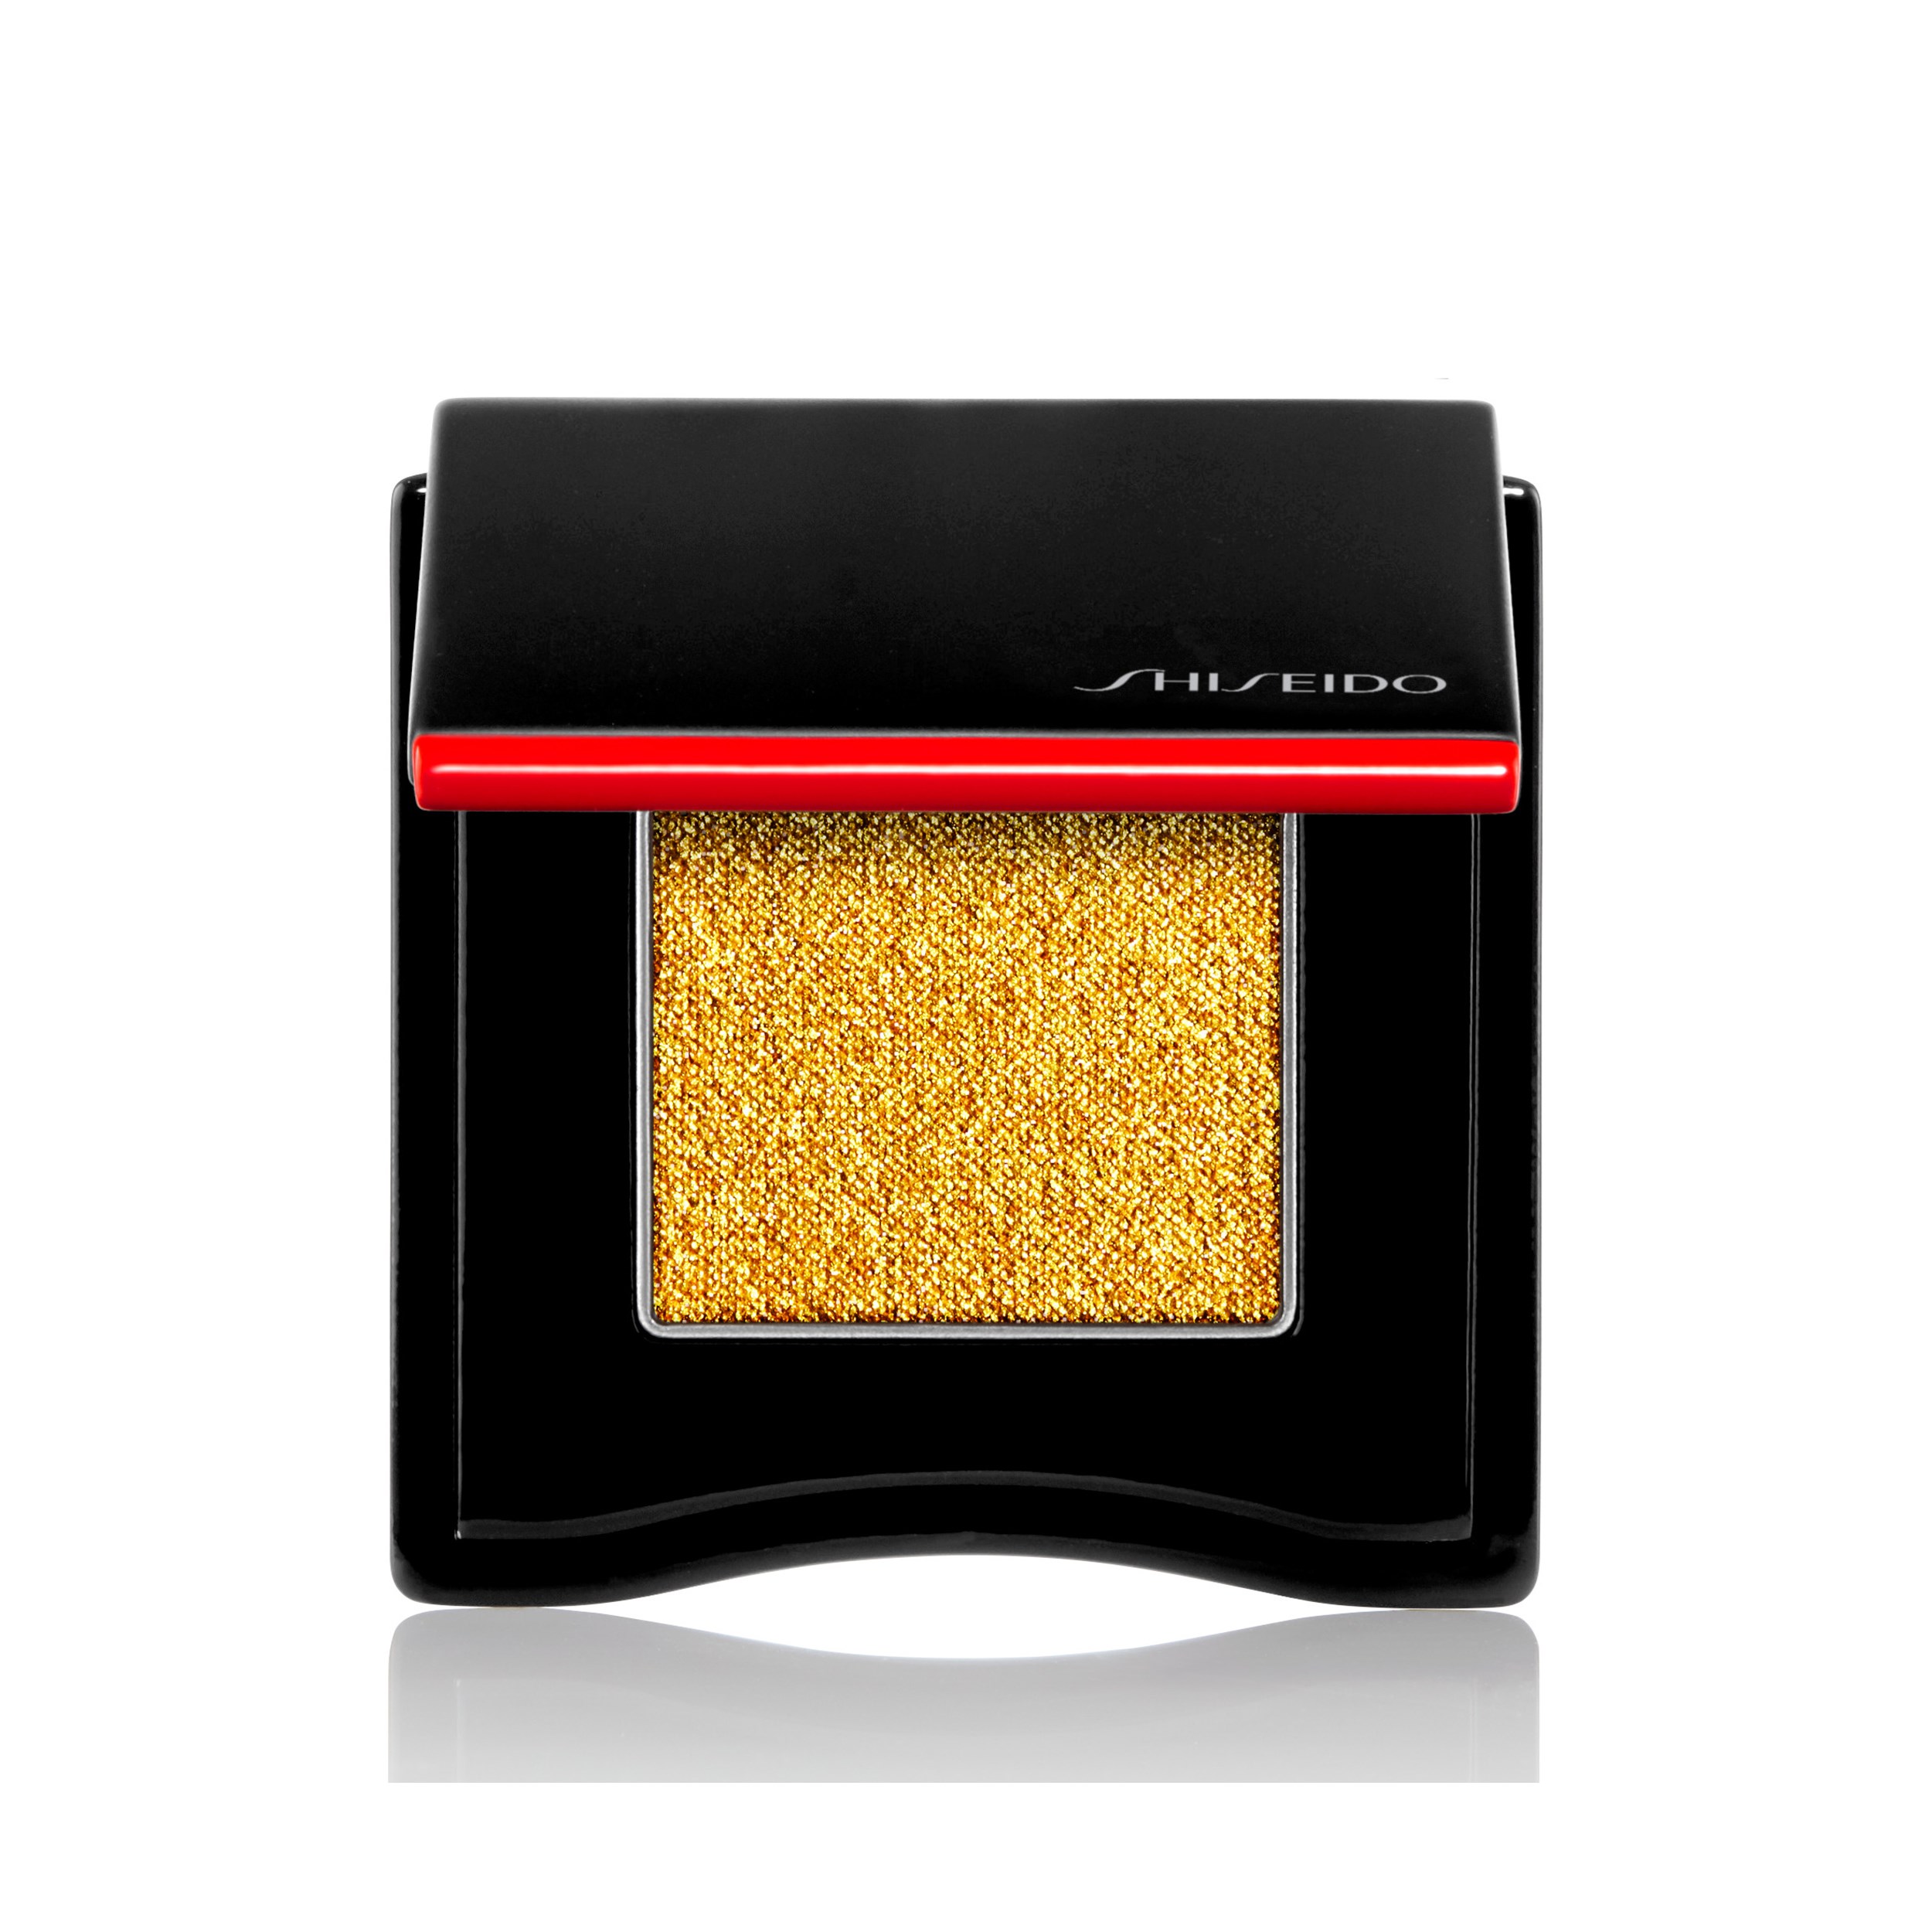 Shiseido Pop powdergel 13 Kan-Kan Gold